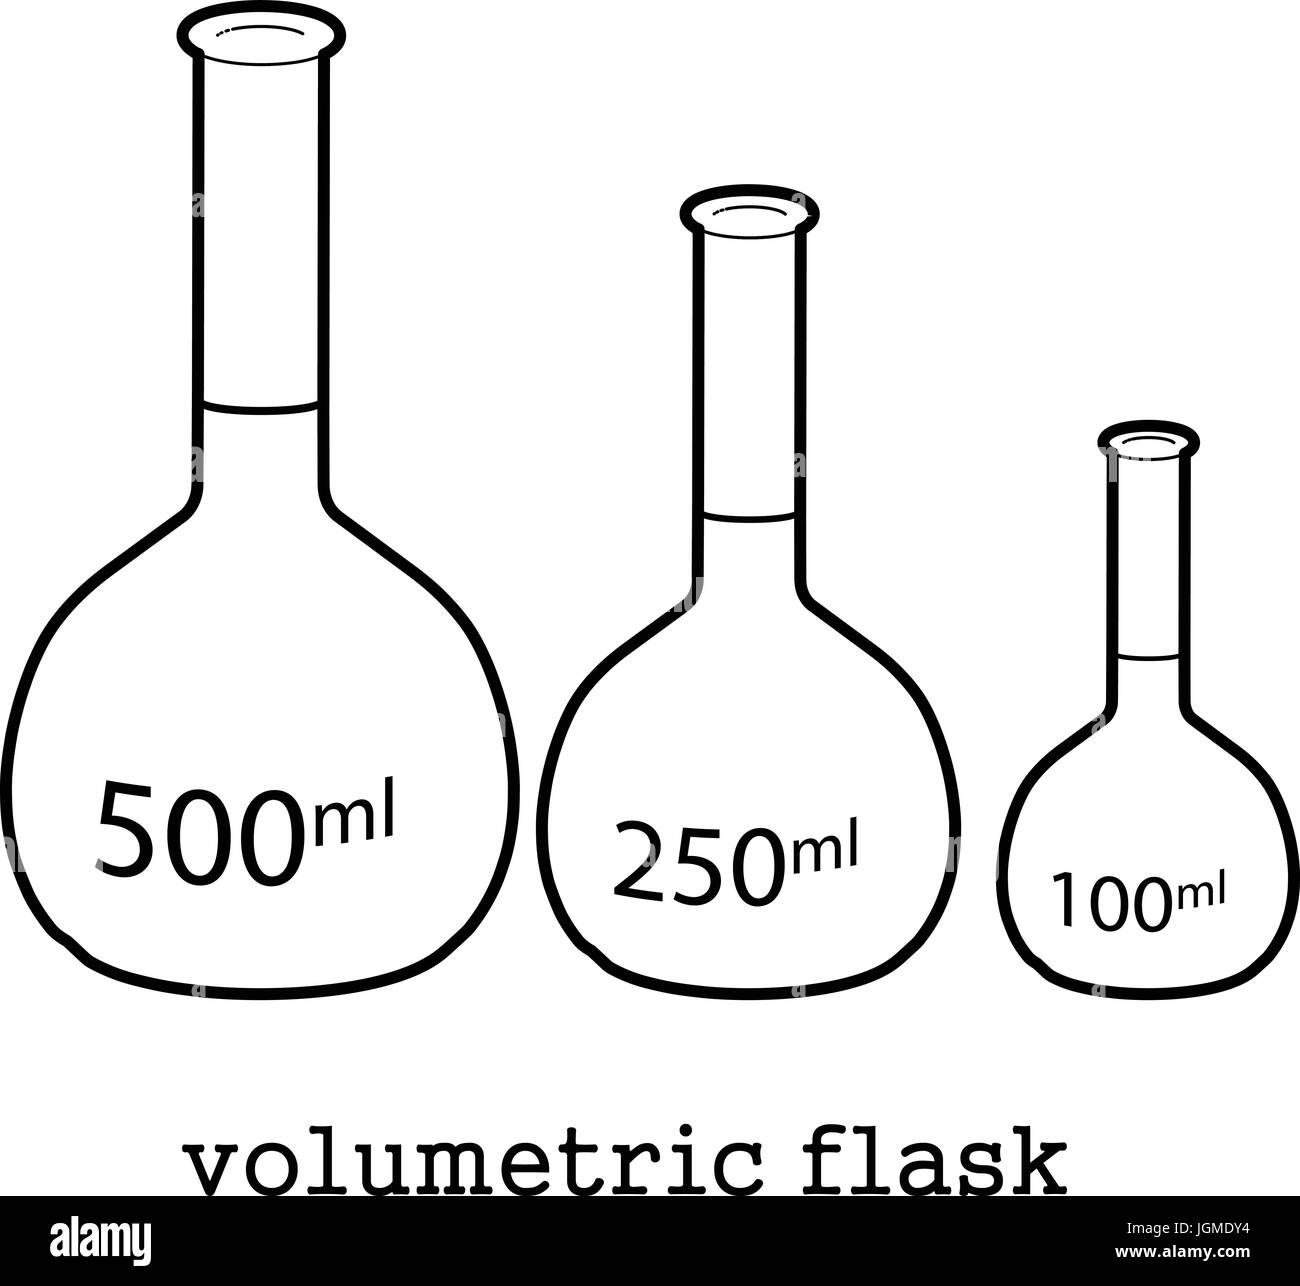 volumetric flask icon outline Stock Vector Art & Illustration, Vector